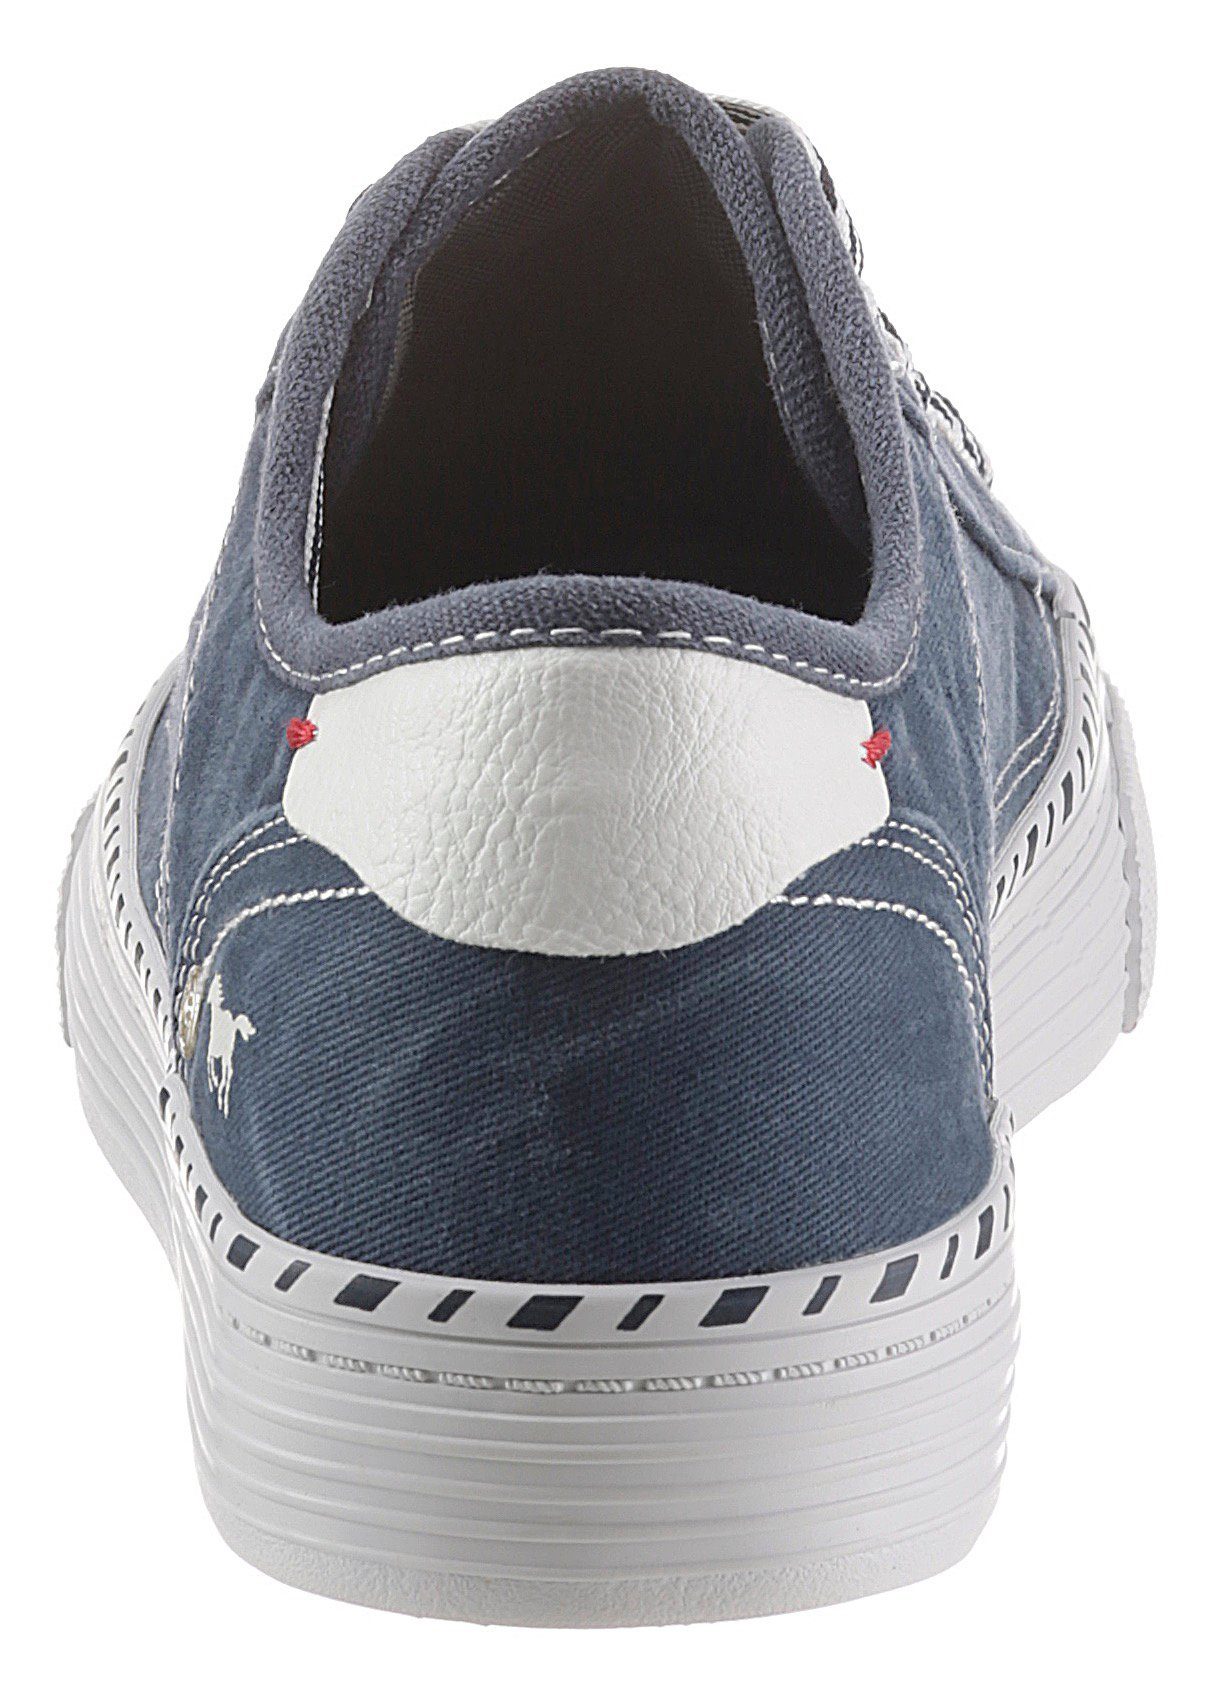 Mustang Shoes Sneaker Plateausohle jeansblau mit cm 3